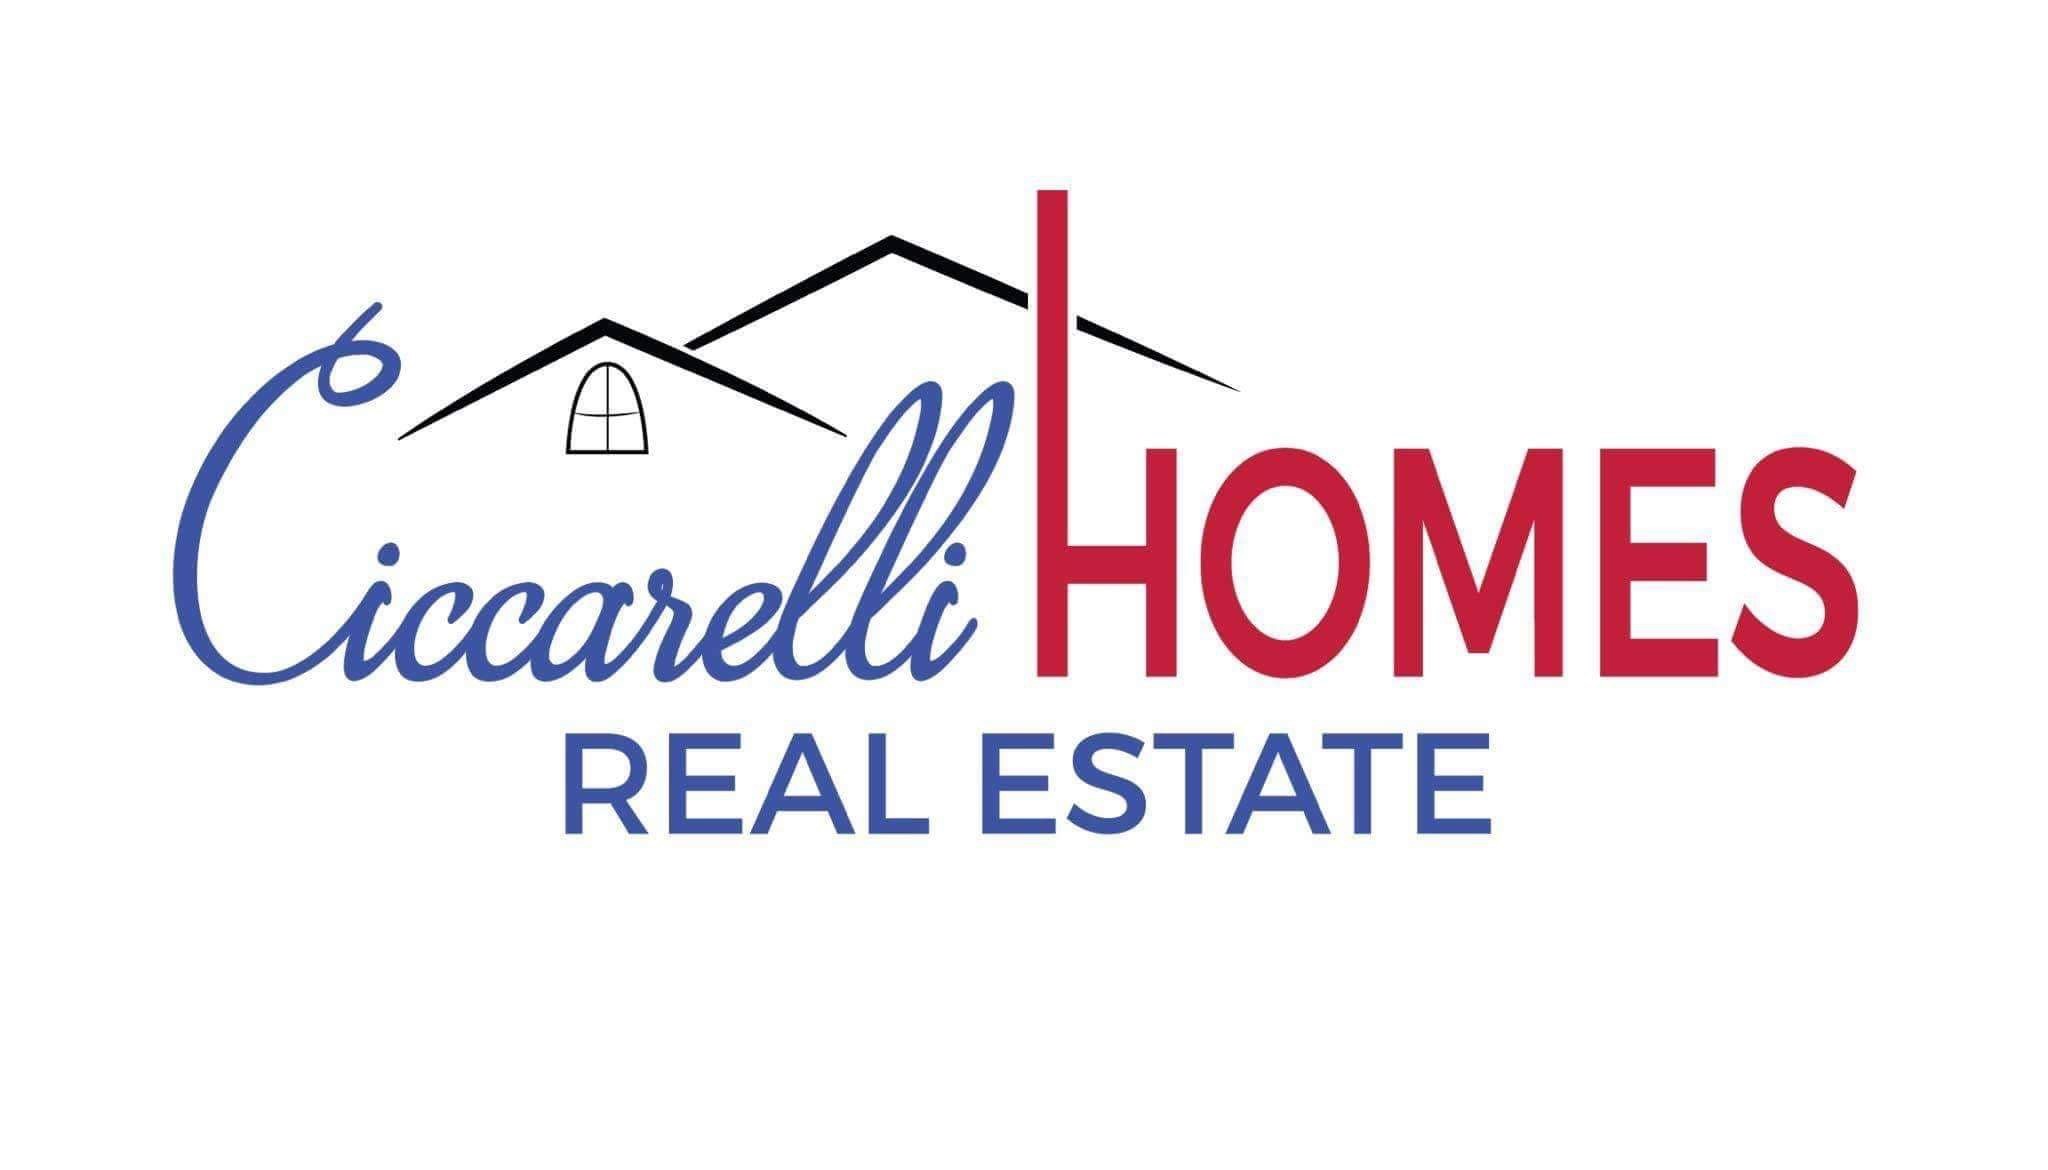 Ciccarelli Homes Real Estate